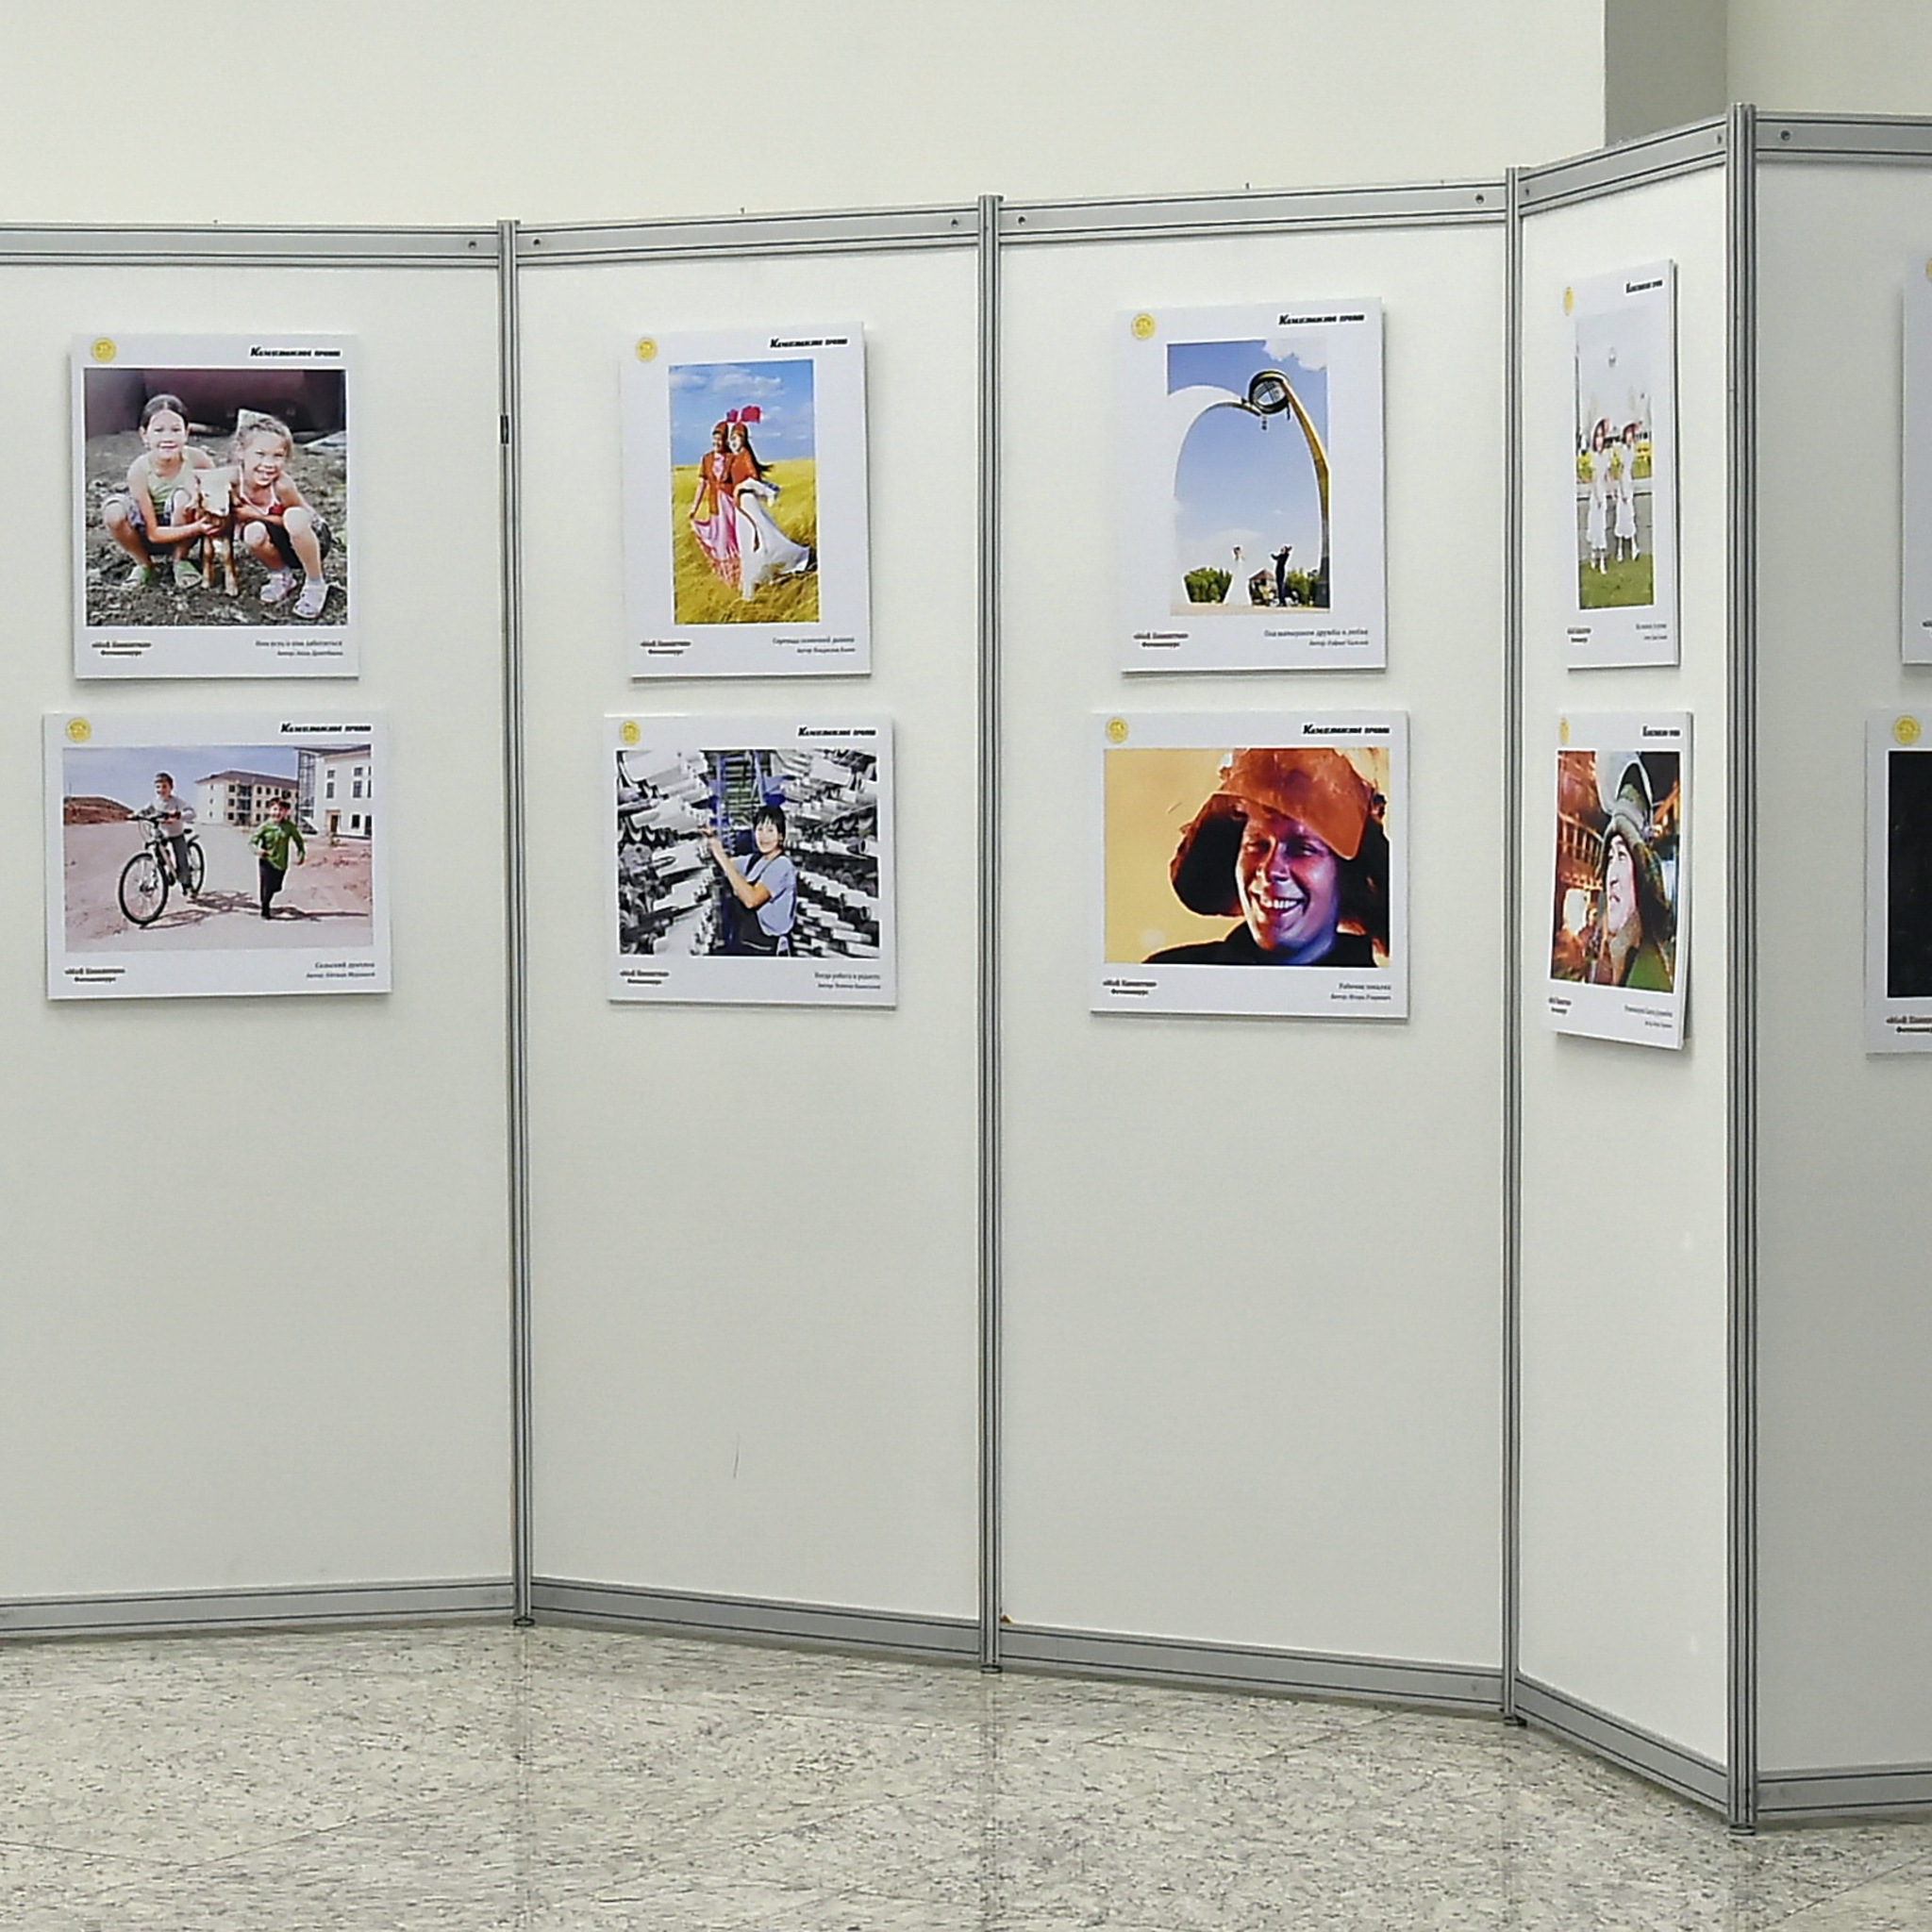 The exhibition My Kazakhstan